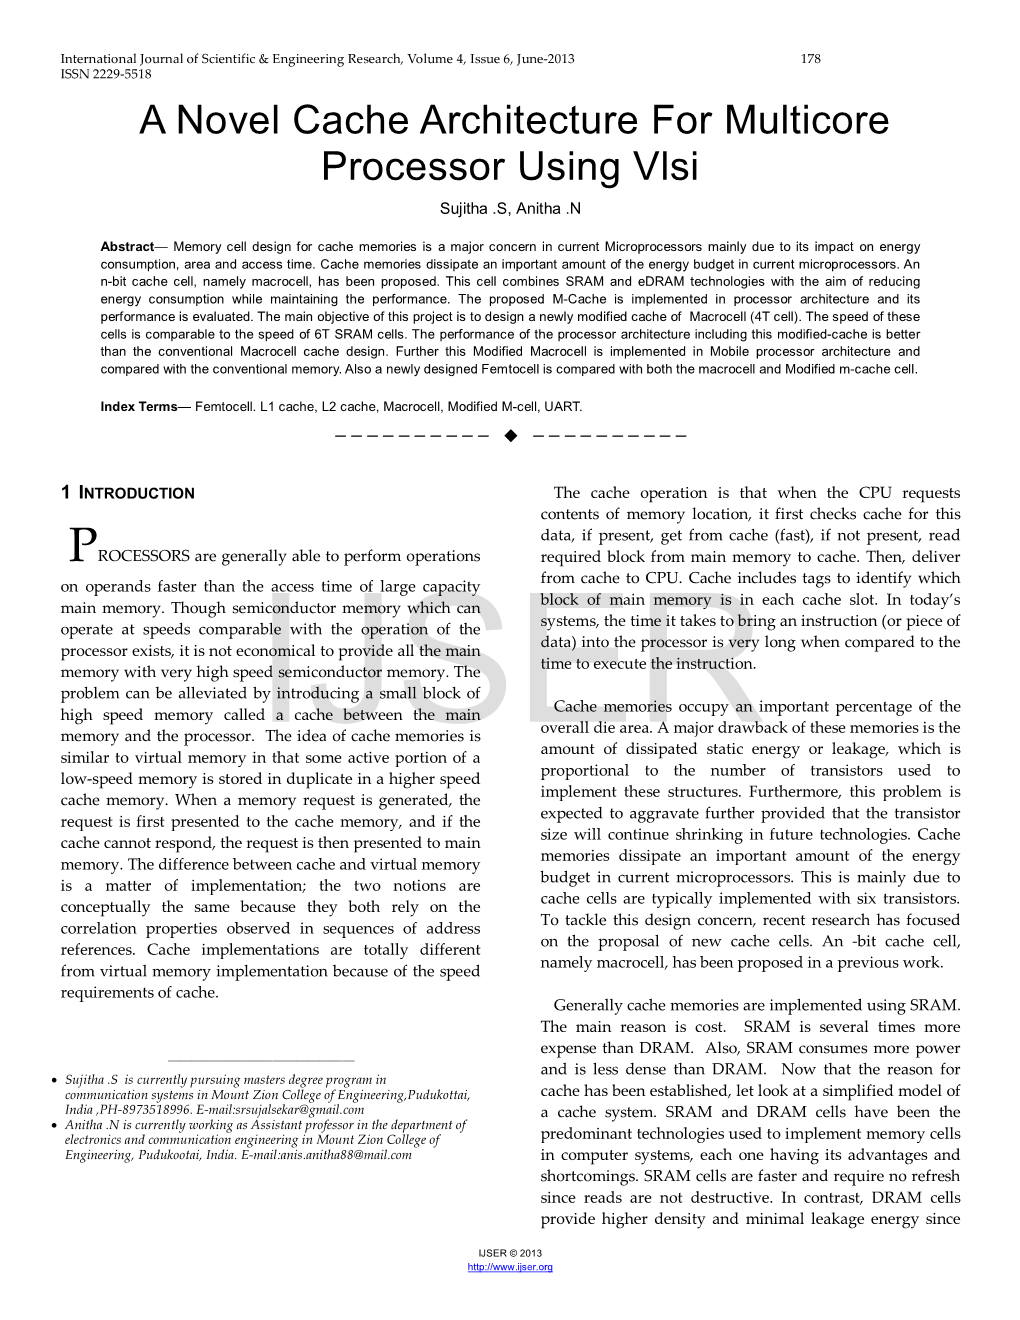 A Novel Cache Architecture for Multicore Processor Using Vlsi Sujitha .S, Anitha .N